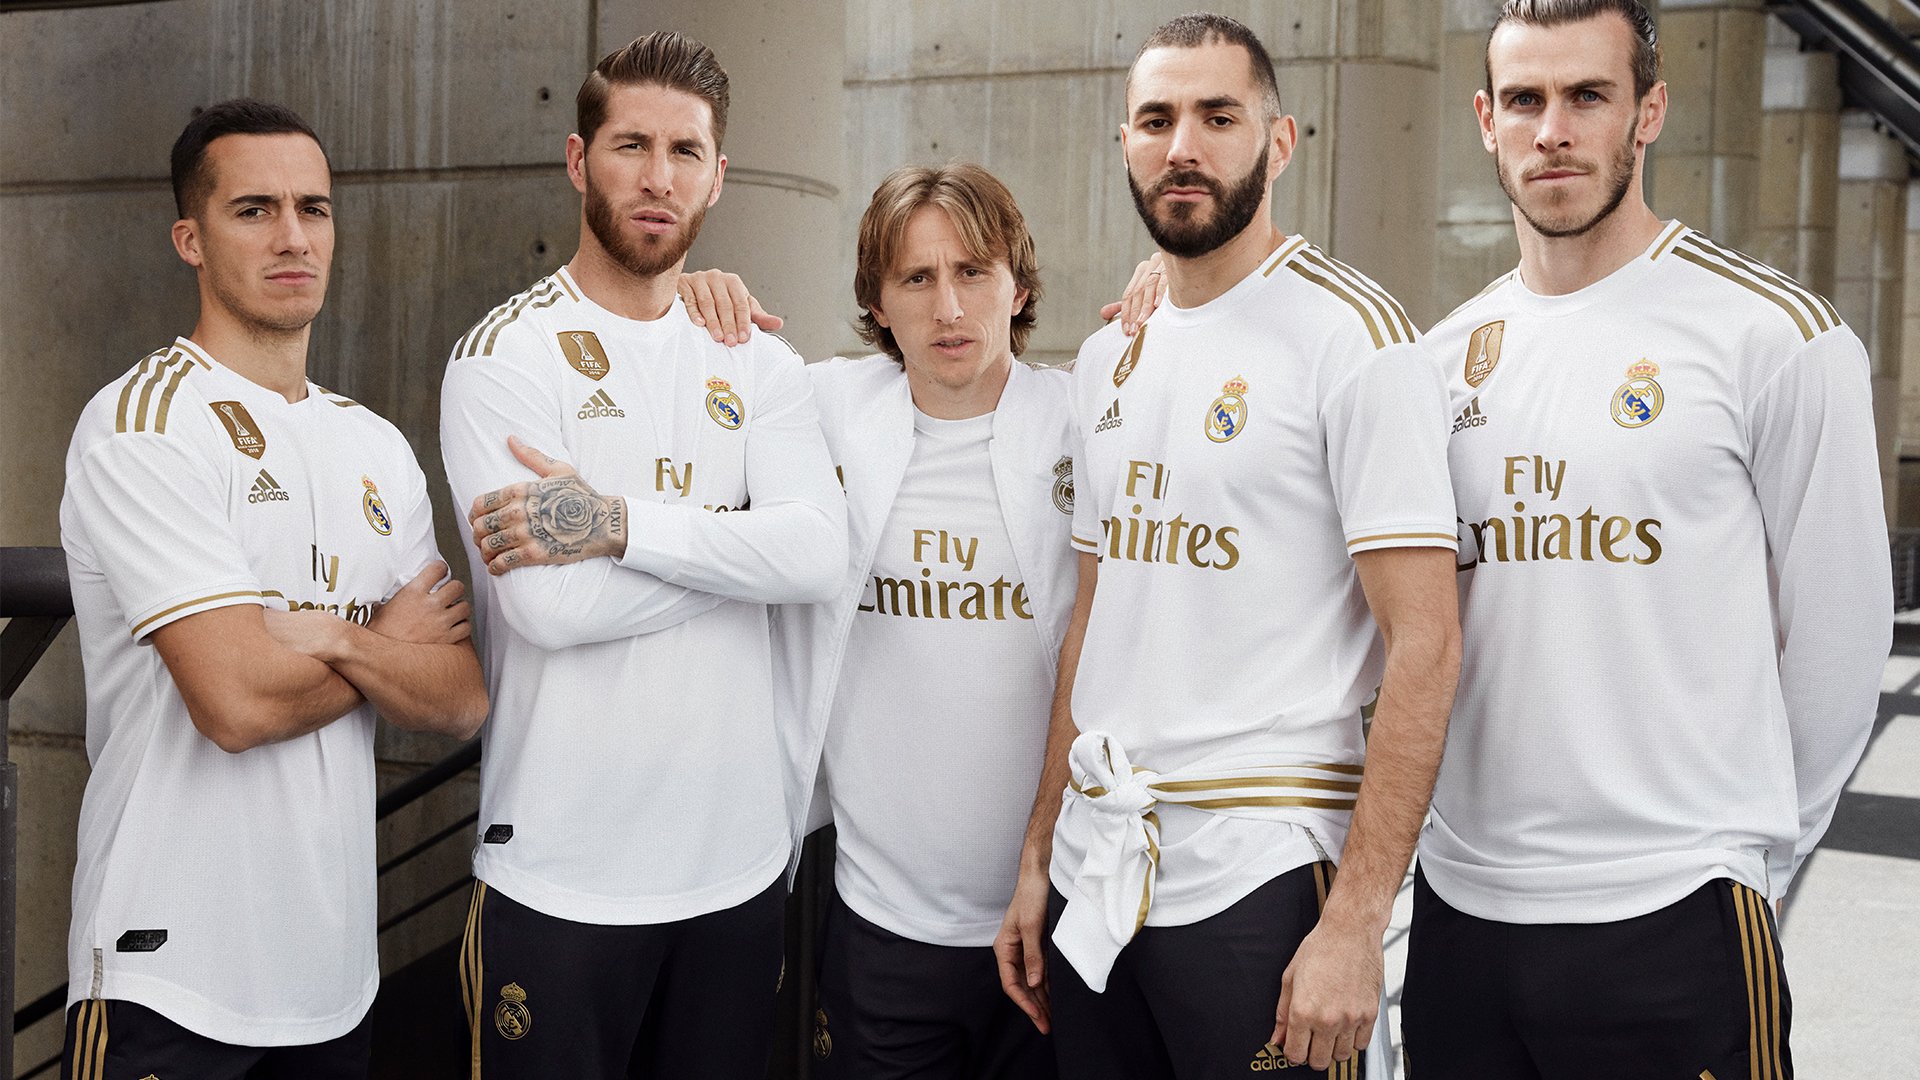 Real Madrid C.F. on Twitter: "🙌👏 La nueva primera equipación 2019/20 está que 🔥. https://t.co/I6nlBSrnHH #HalaMadrid | #DareToCreate | @ adidasfootball / Twitter